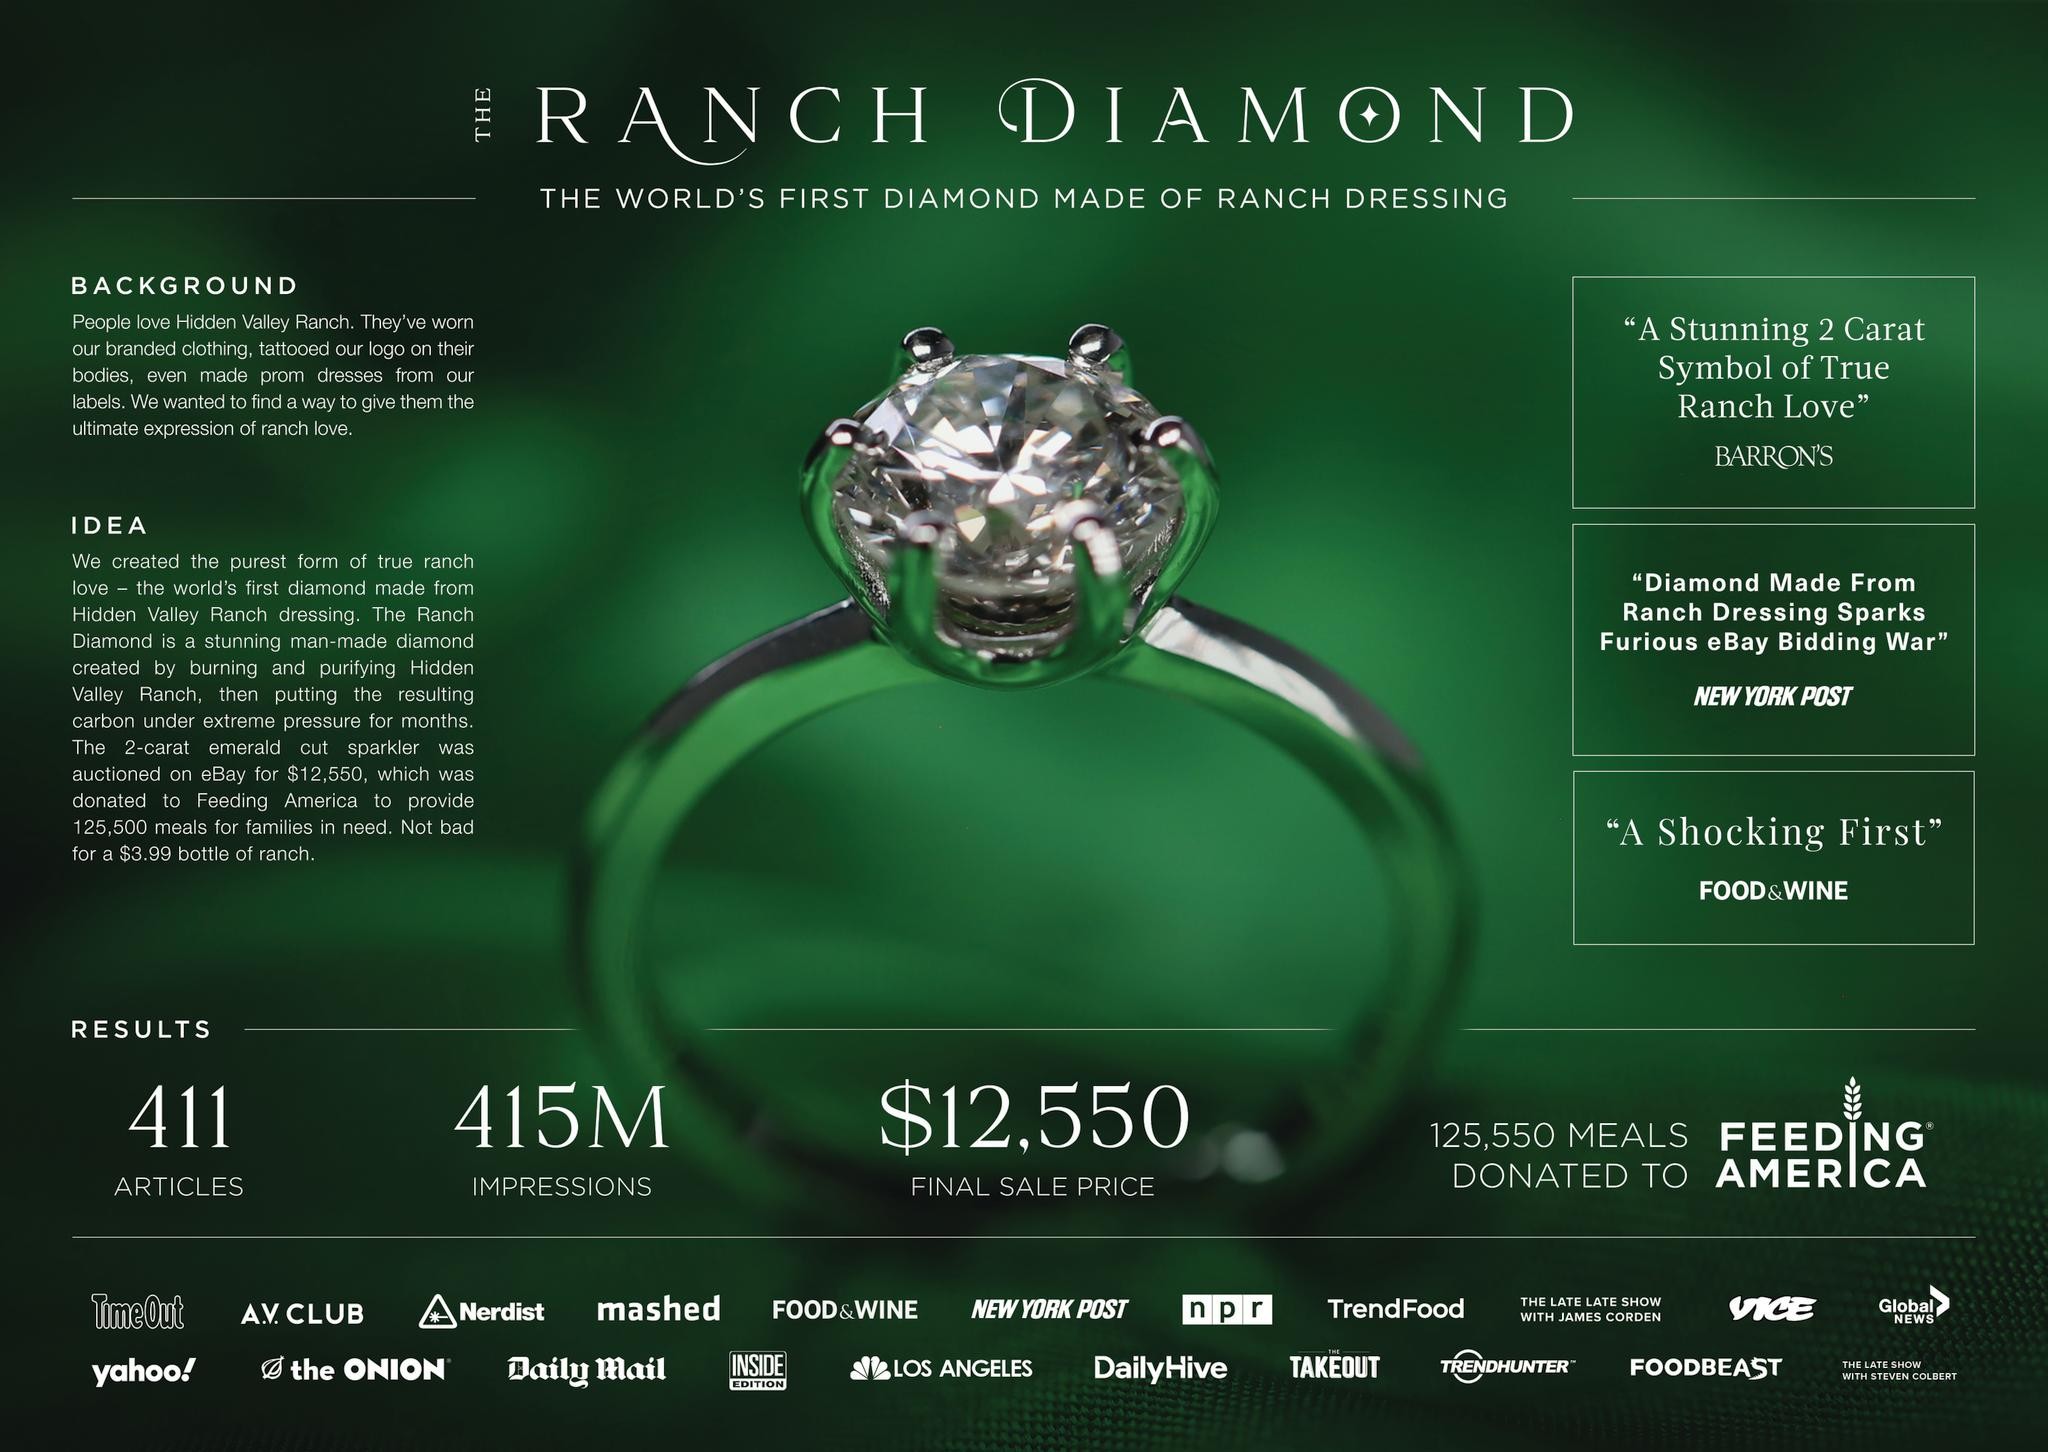 The Ranch Diamond